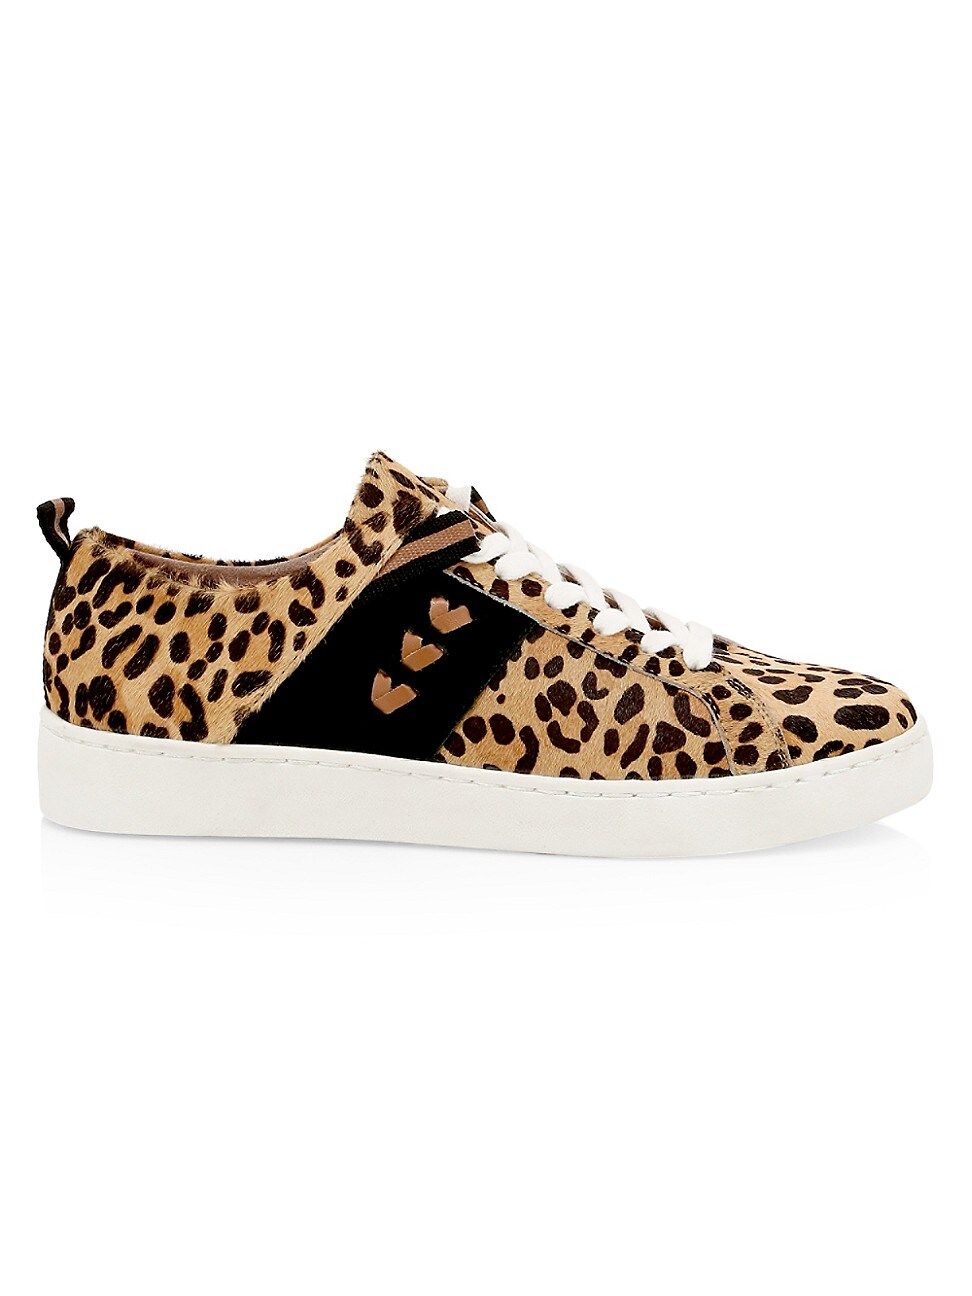 Jack Rogers Women's Ainsley Leopard-Print Calf Hair Sneakers - Leopard - Size 7.5 | Saks Fifth Avenue